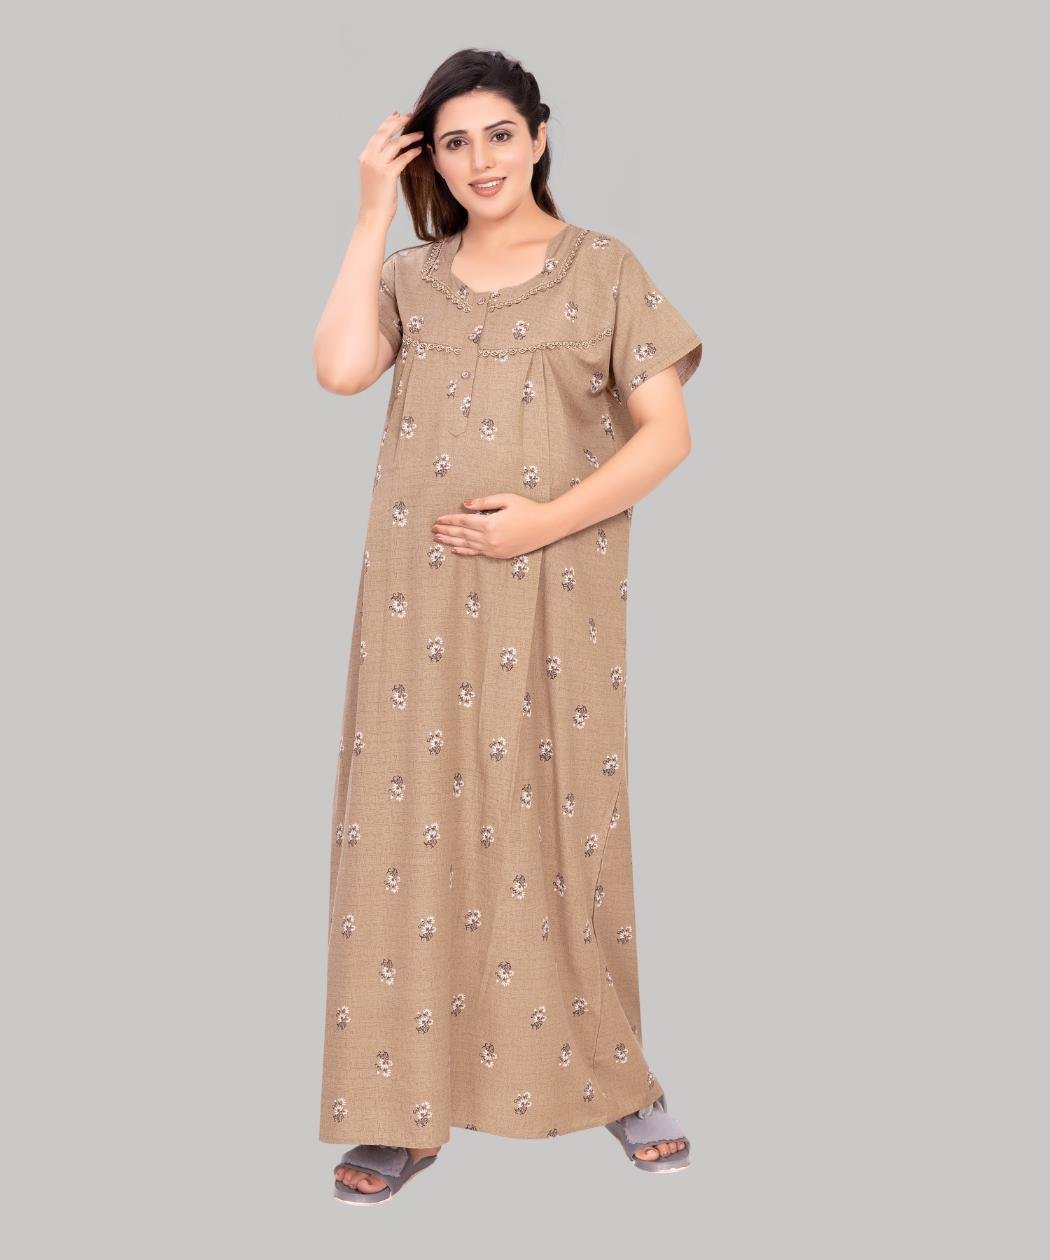 Buy HENAL Women's Cotton Maternity Dress Pregnancy Casual Long Sleeve Dual  Zipped for Feeding Nursing Maternity Dress Teal Gold Dot Kurti at Amazon.in